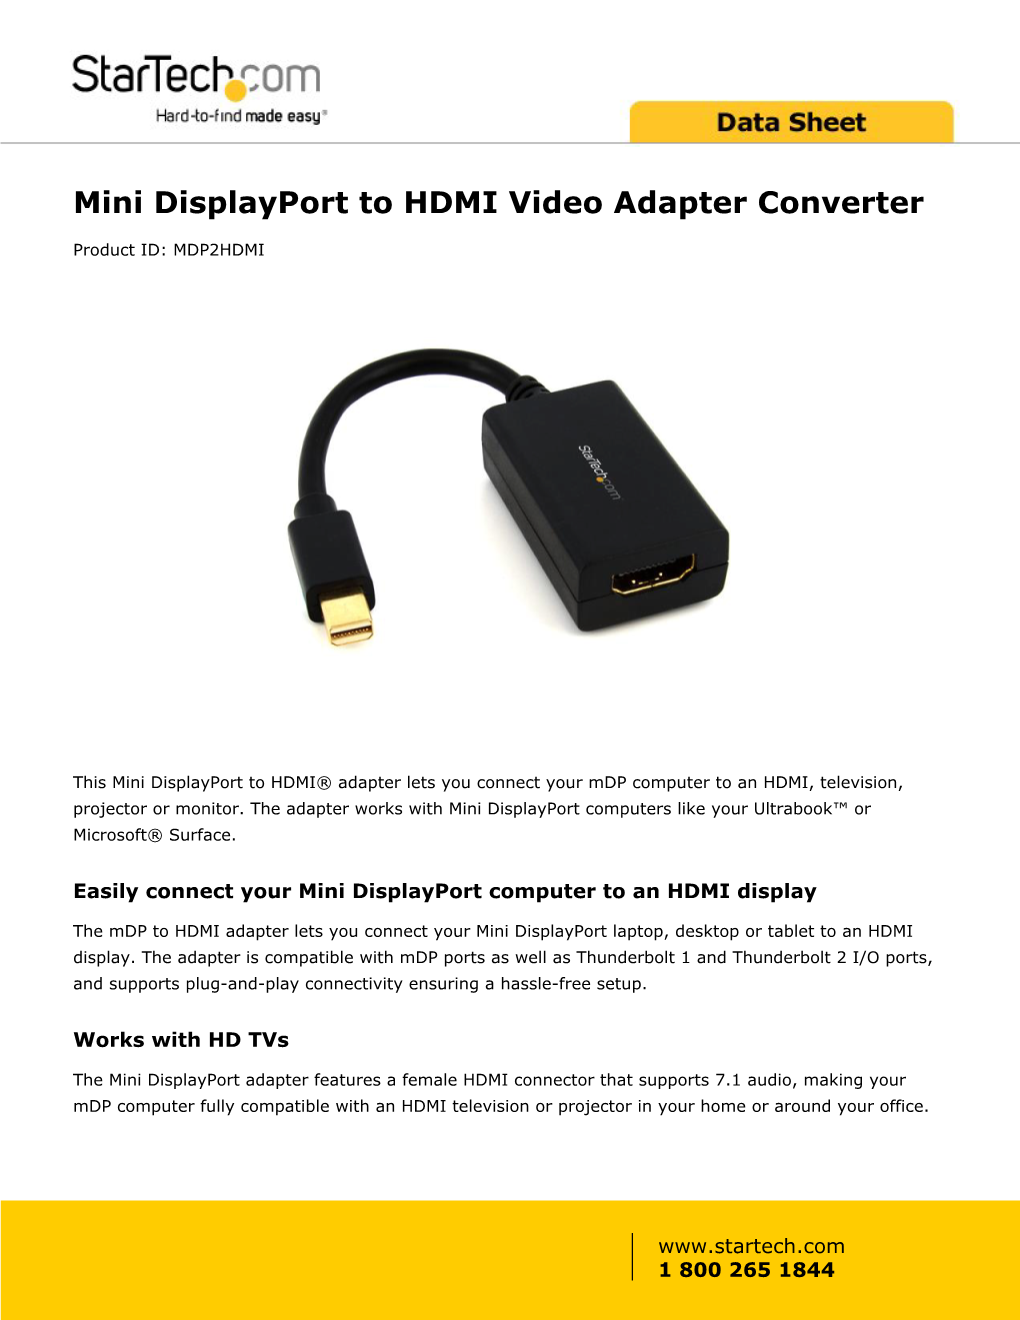 Mini Displayport to HDMI Video Adapter Converter